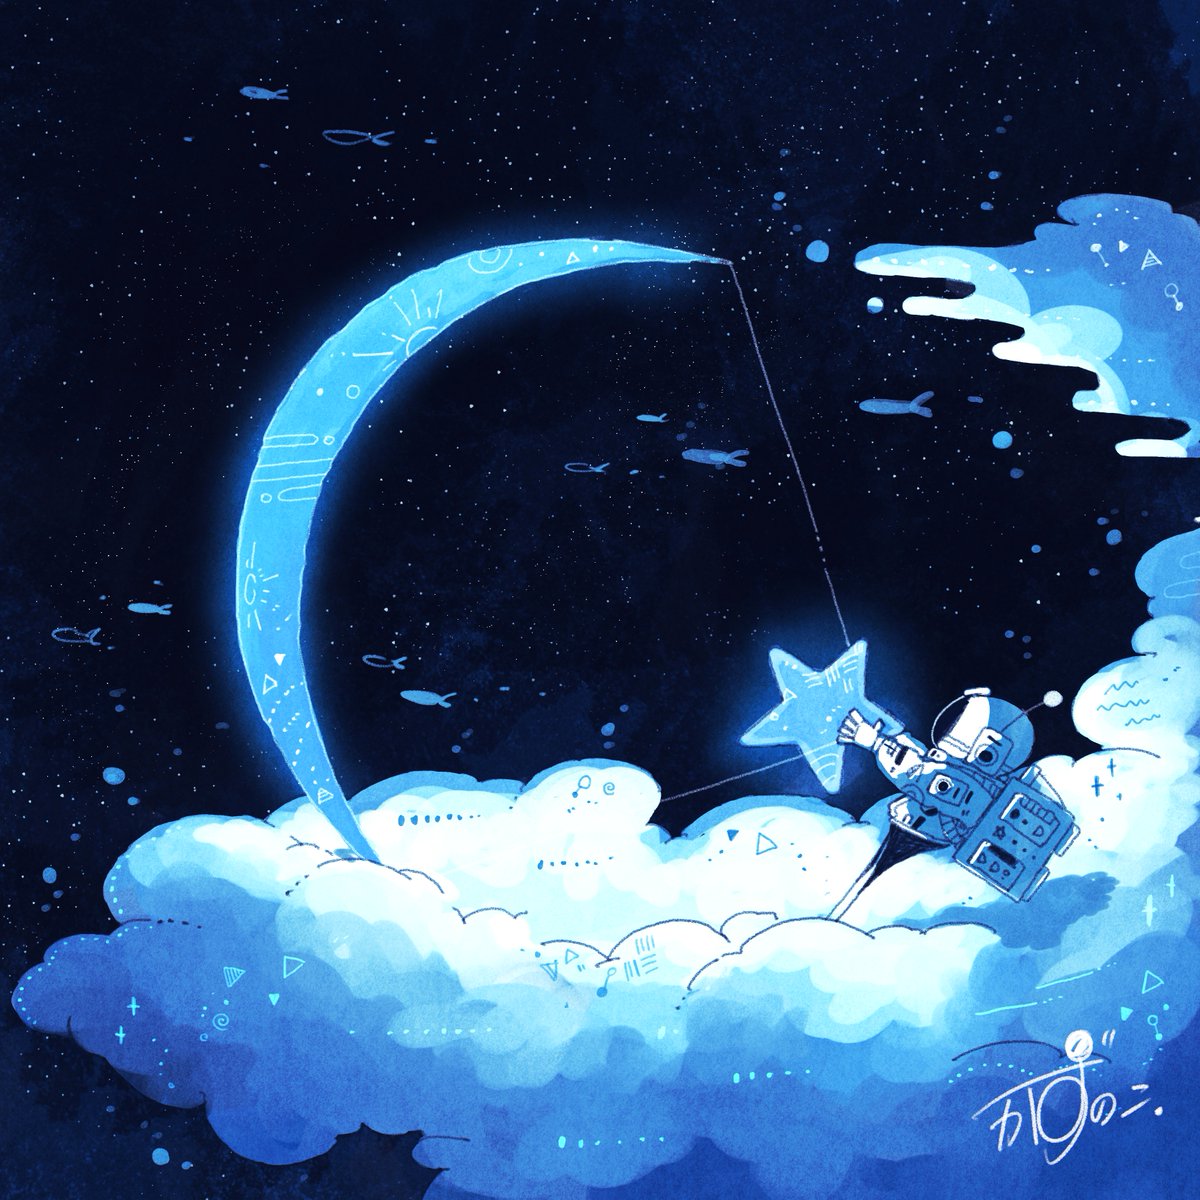 solo holding sky artist name cloud signature star (symbol)  illustration images